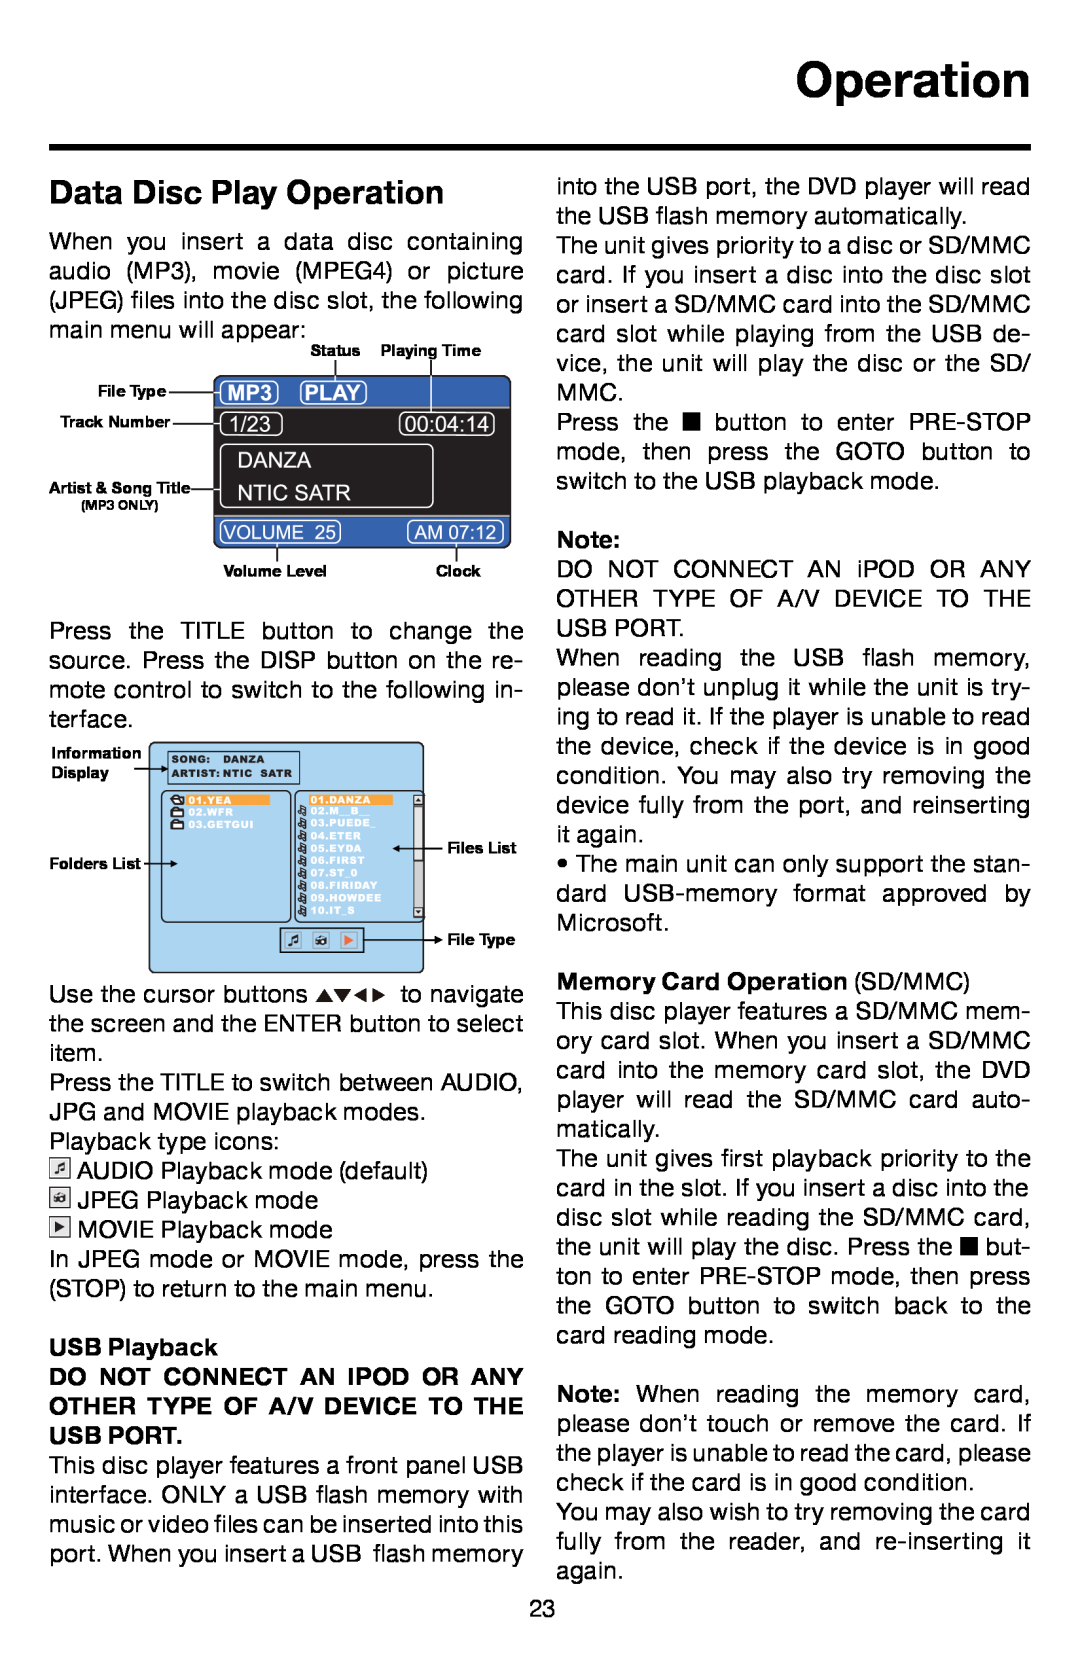 Roadmaster VRVD630 manual Data Disc Play Operation, USB Playback, Memory Card Operation SD/MMC 